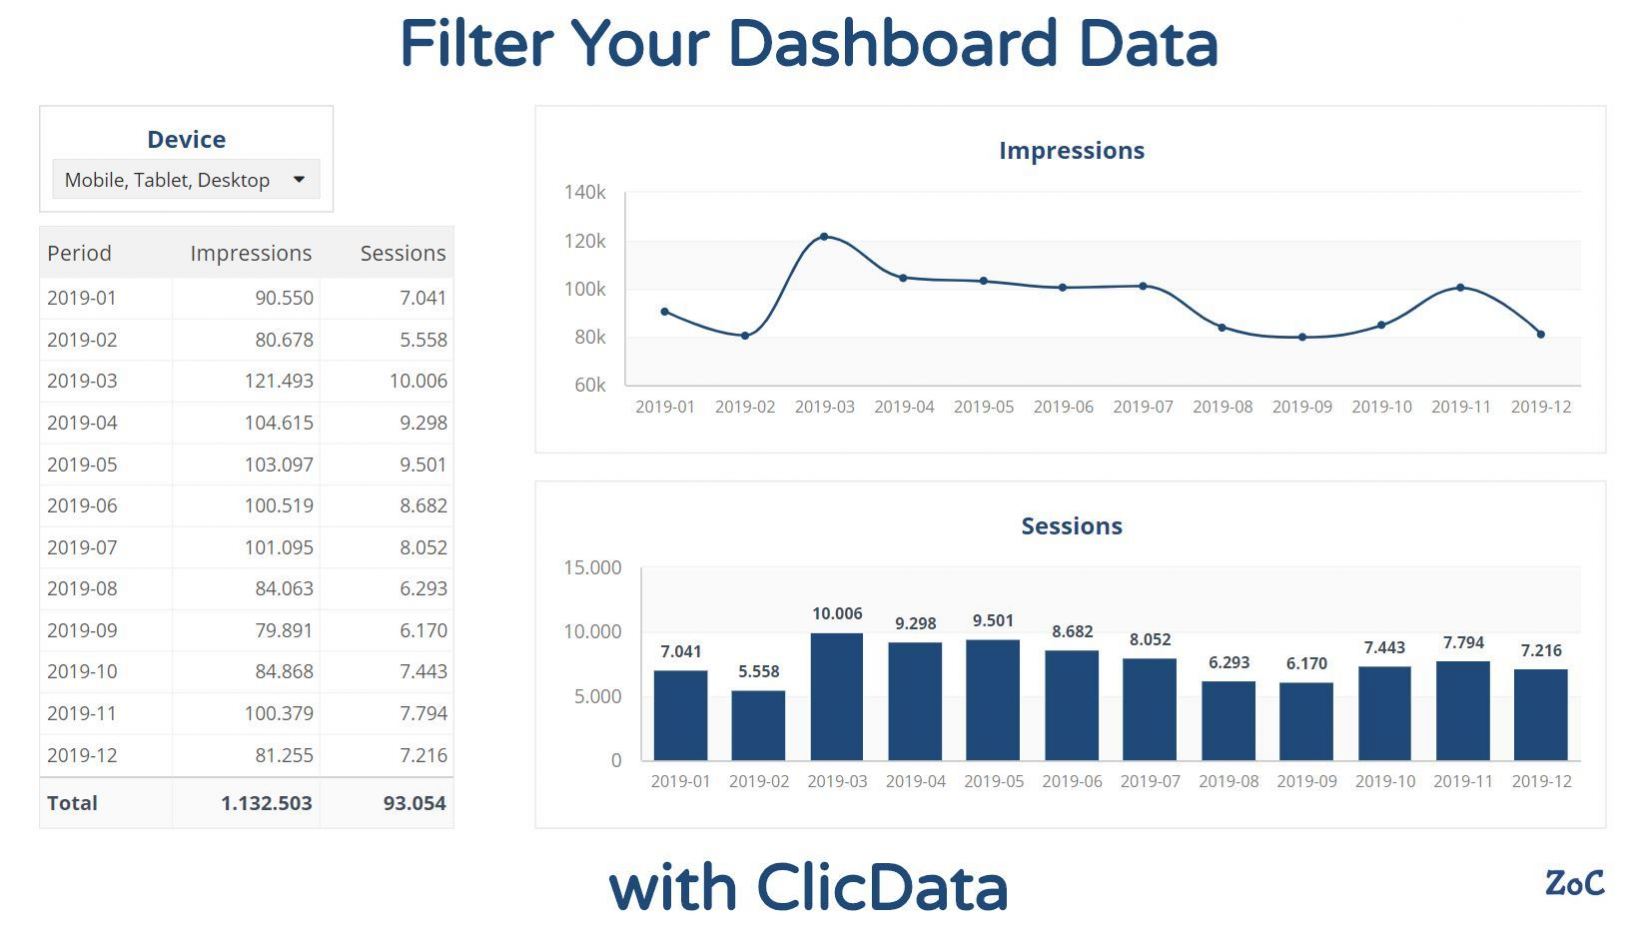 Video: Filter je Dashboard Data met ClicData